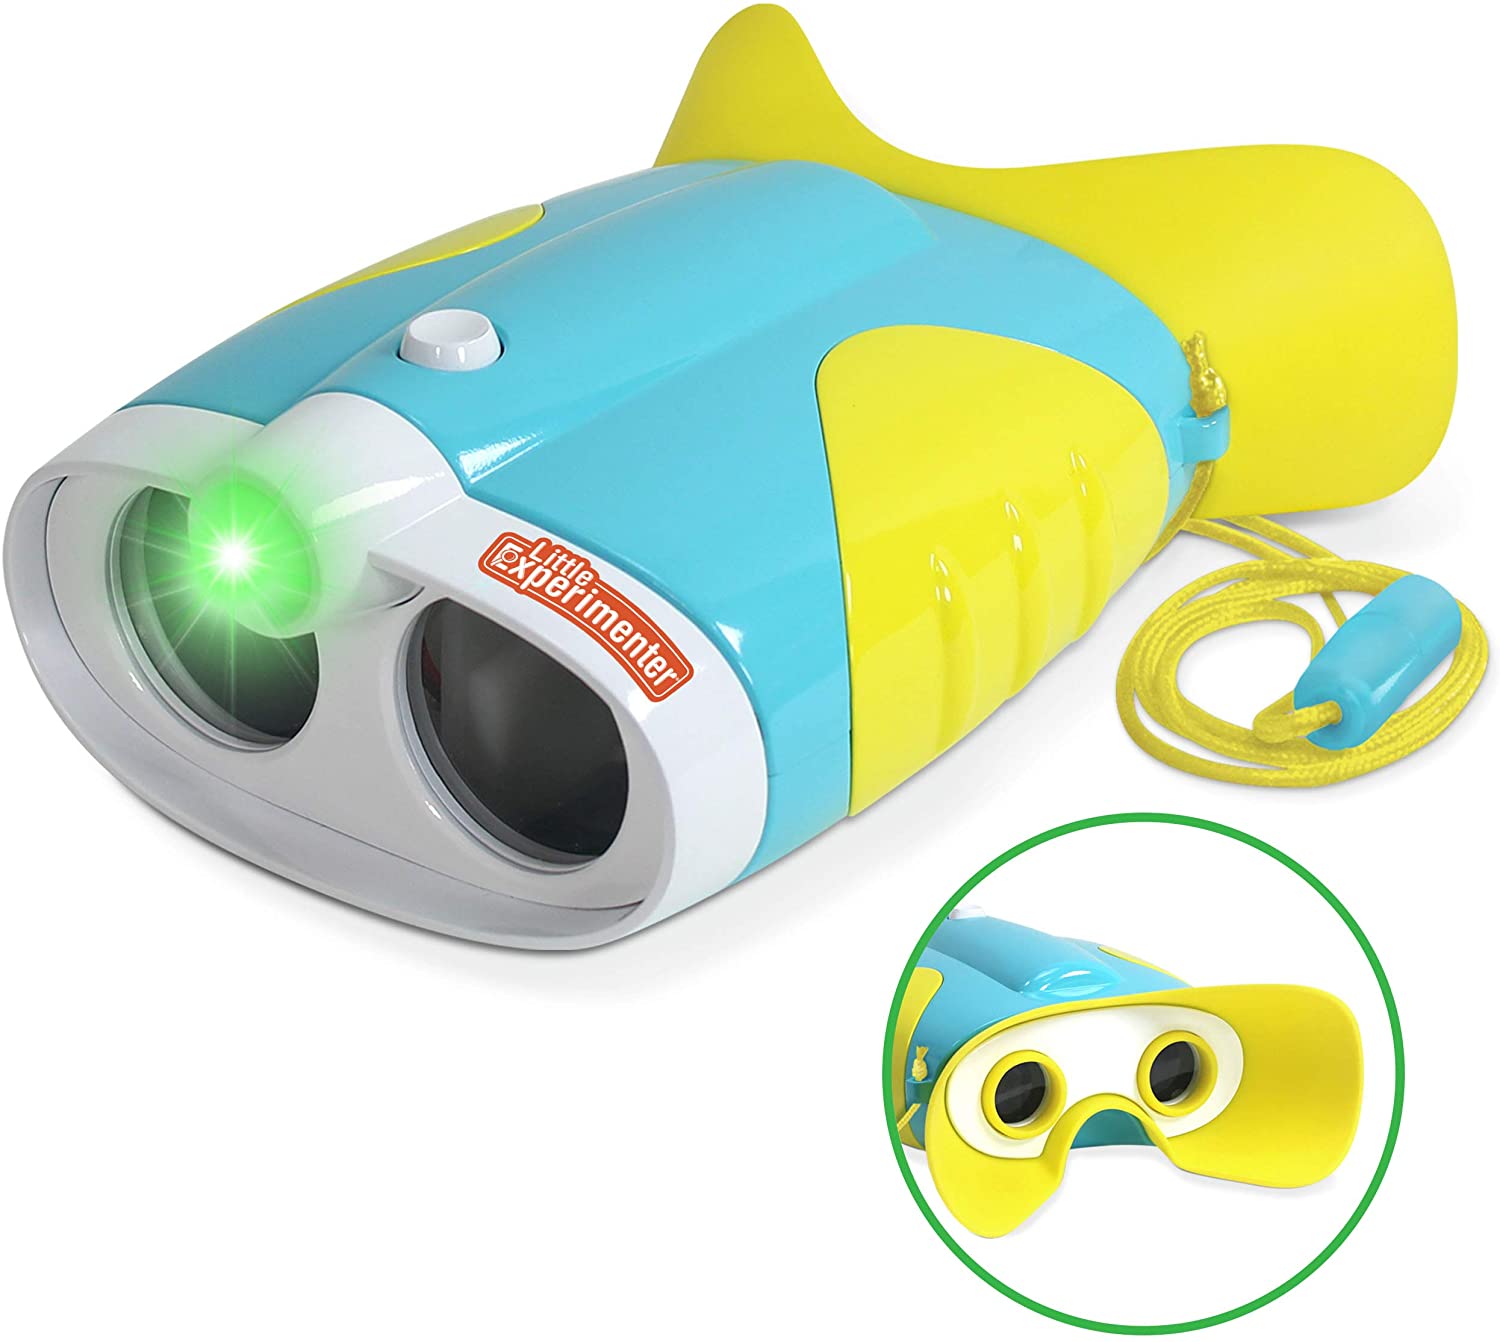 Advenuture Night Vision Binoculars for Kids